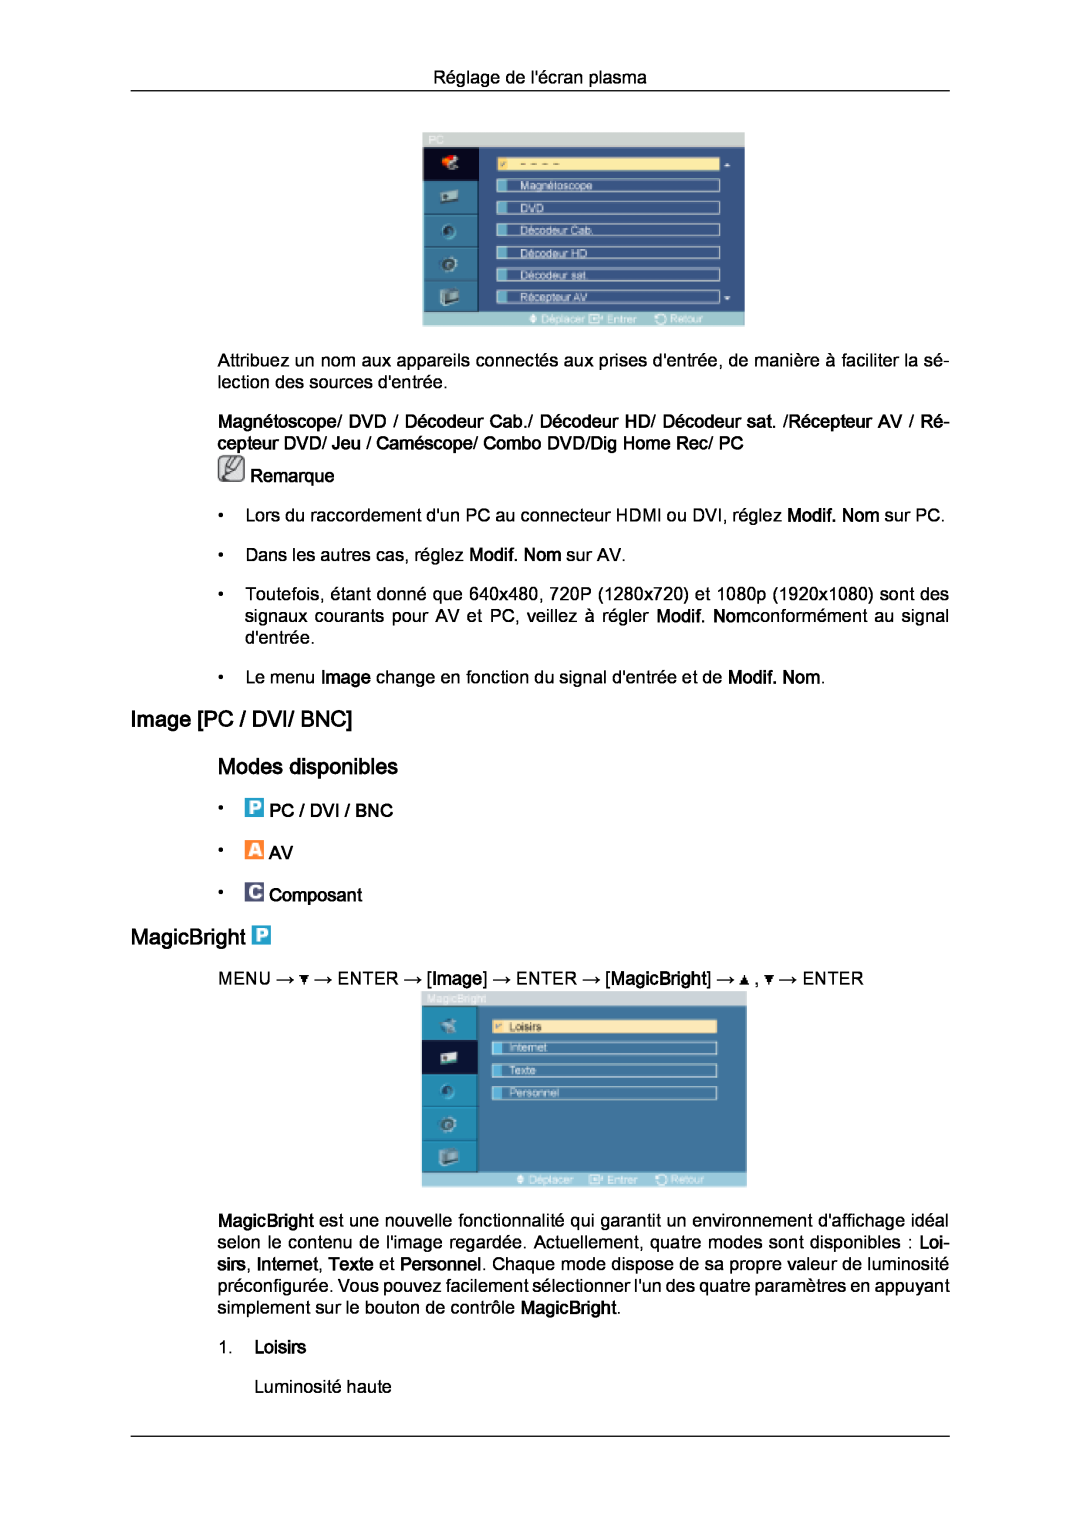 Samsung PH50KPPLBF/EN manual Image PC / DVI/ BNC Modes disponibles, MagicBright, PC / DVI / BNC AV Composant, Remarque 